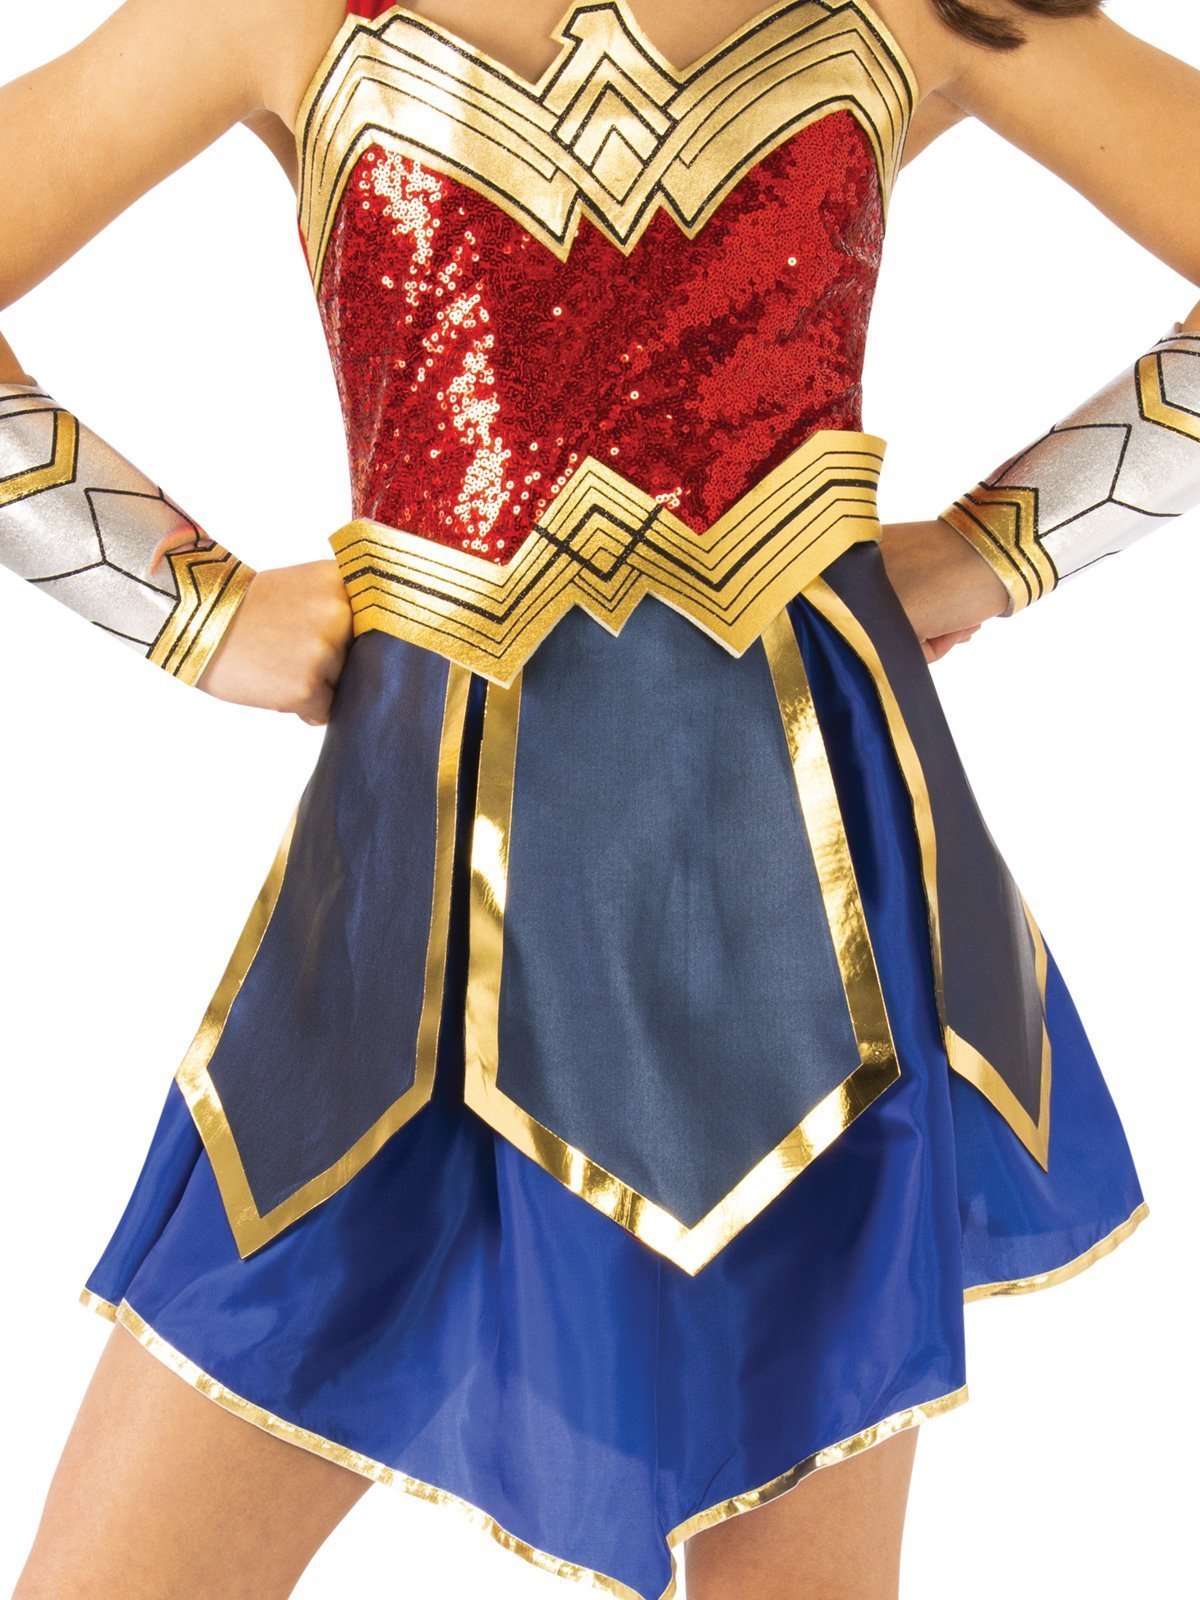 Wonder Woman costume index page 14